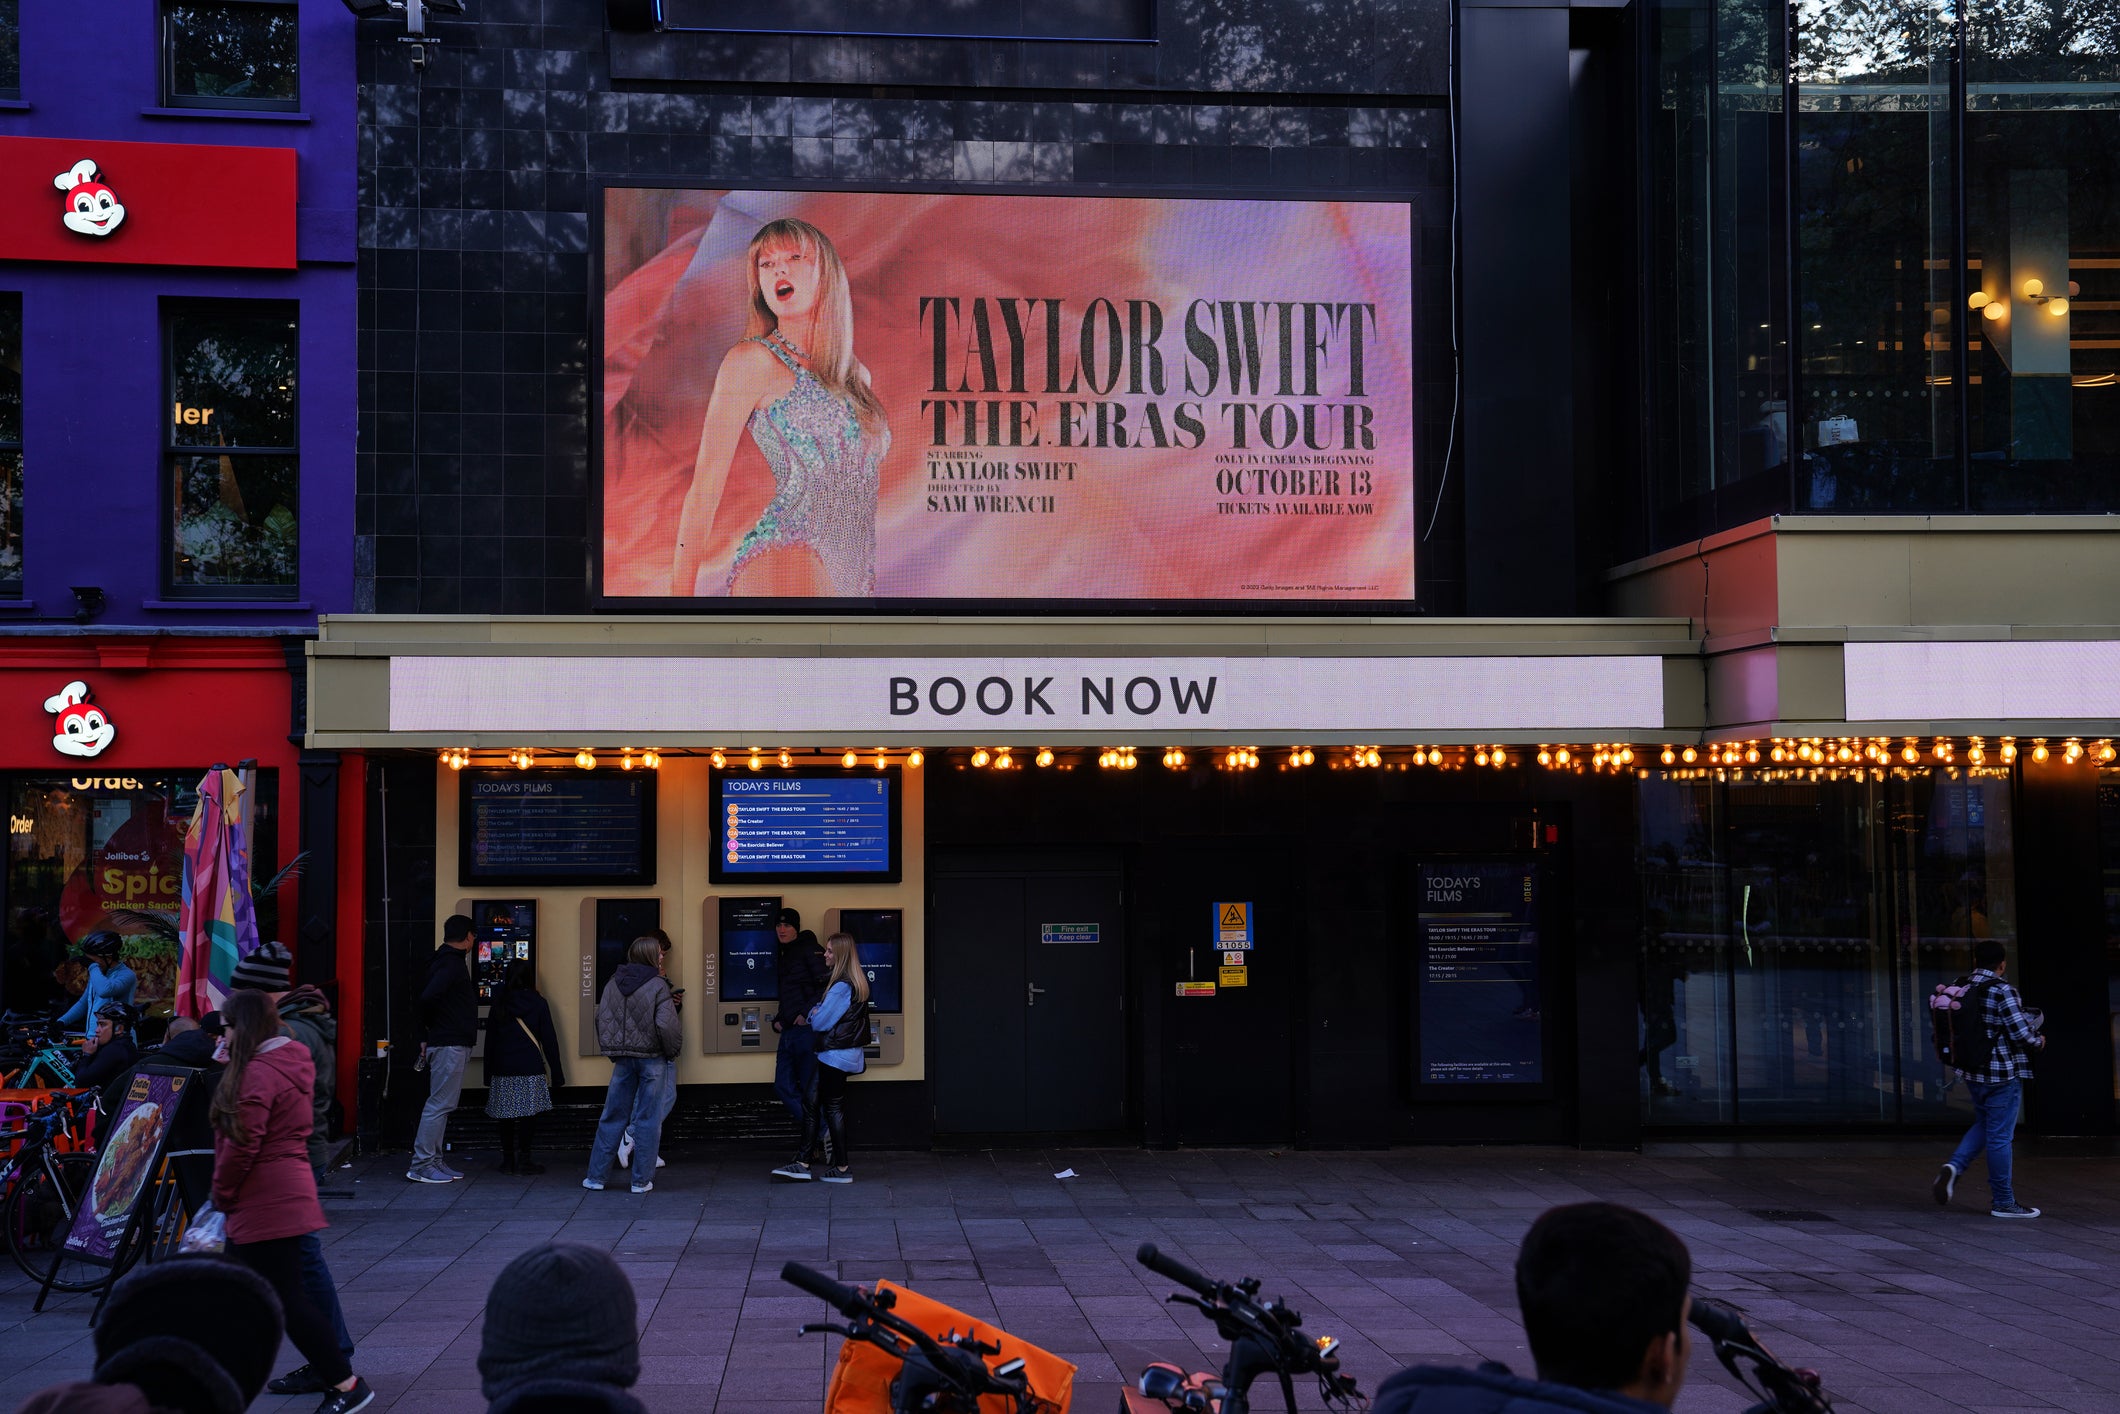 Swift will ‘Shake it Off’ in Scotland from 7 June